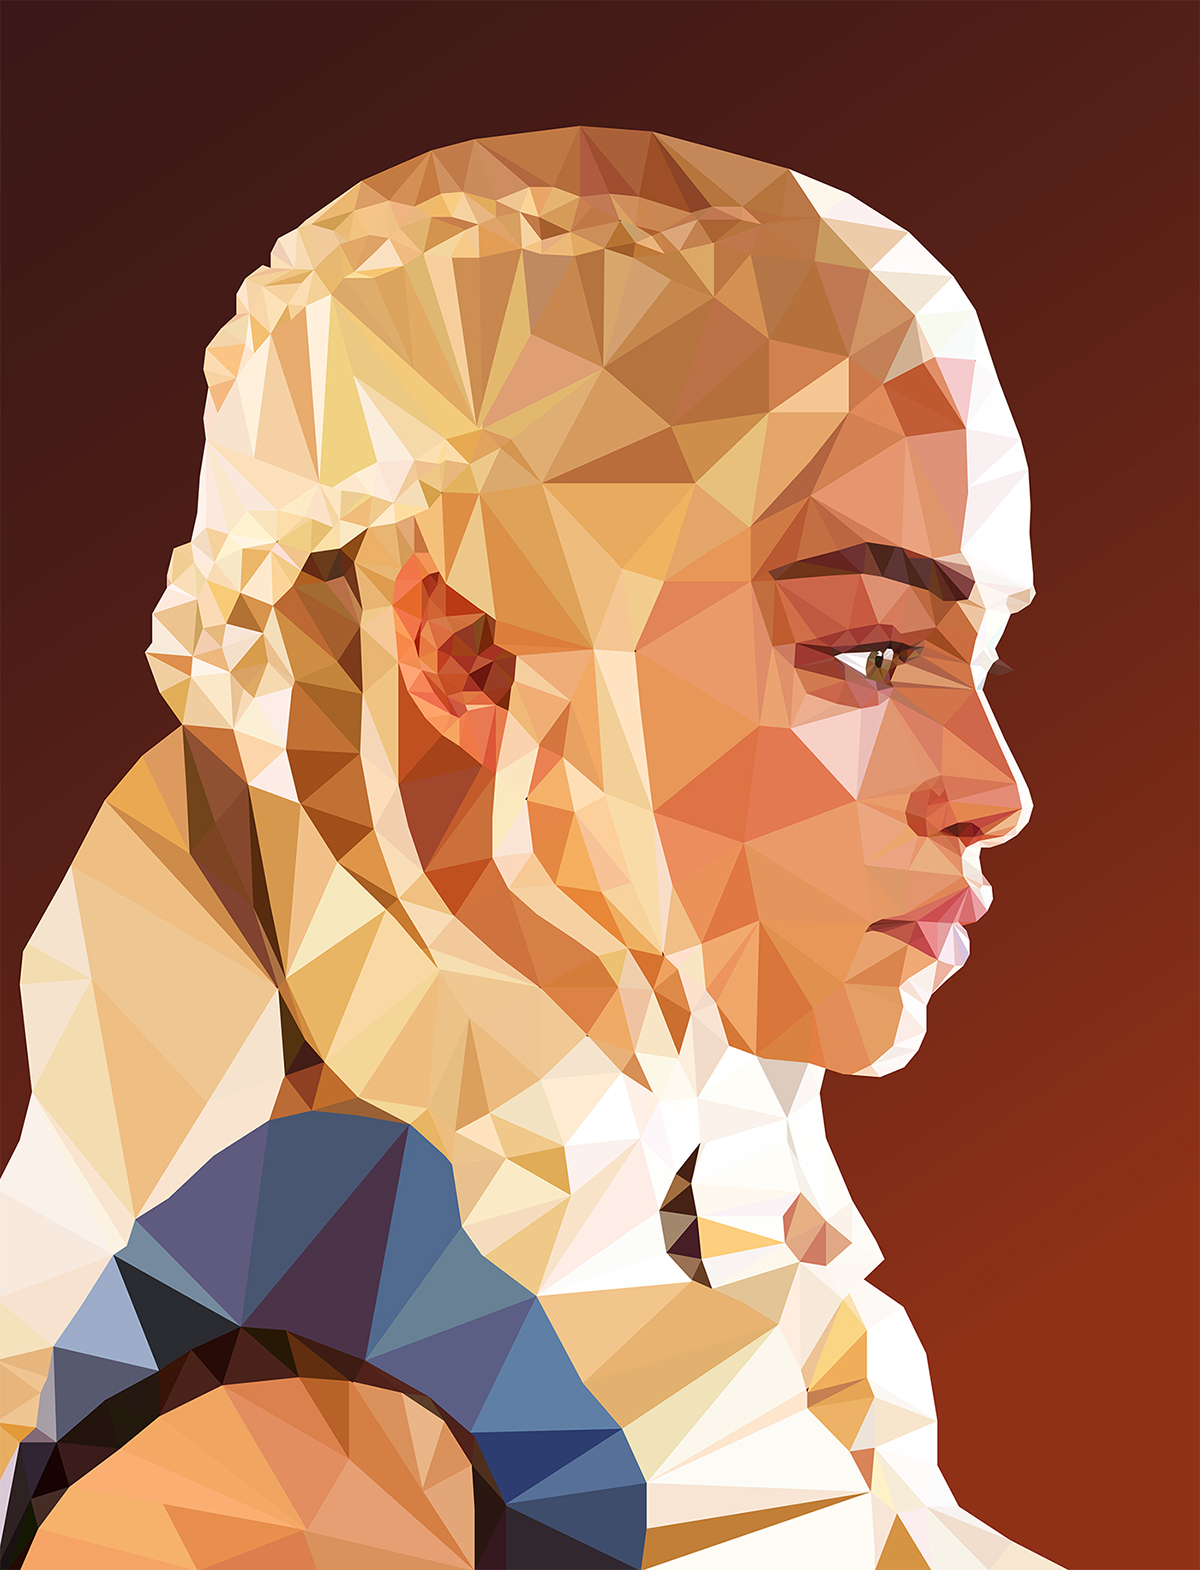 Game of Thrones got daenerys Low Poly polygon mesh portrait